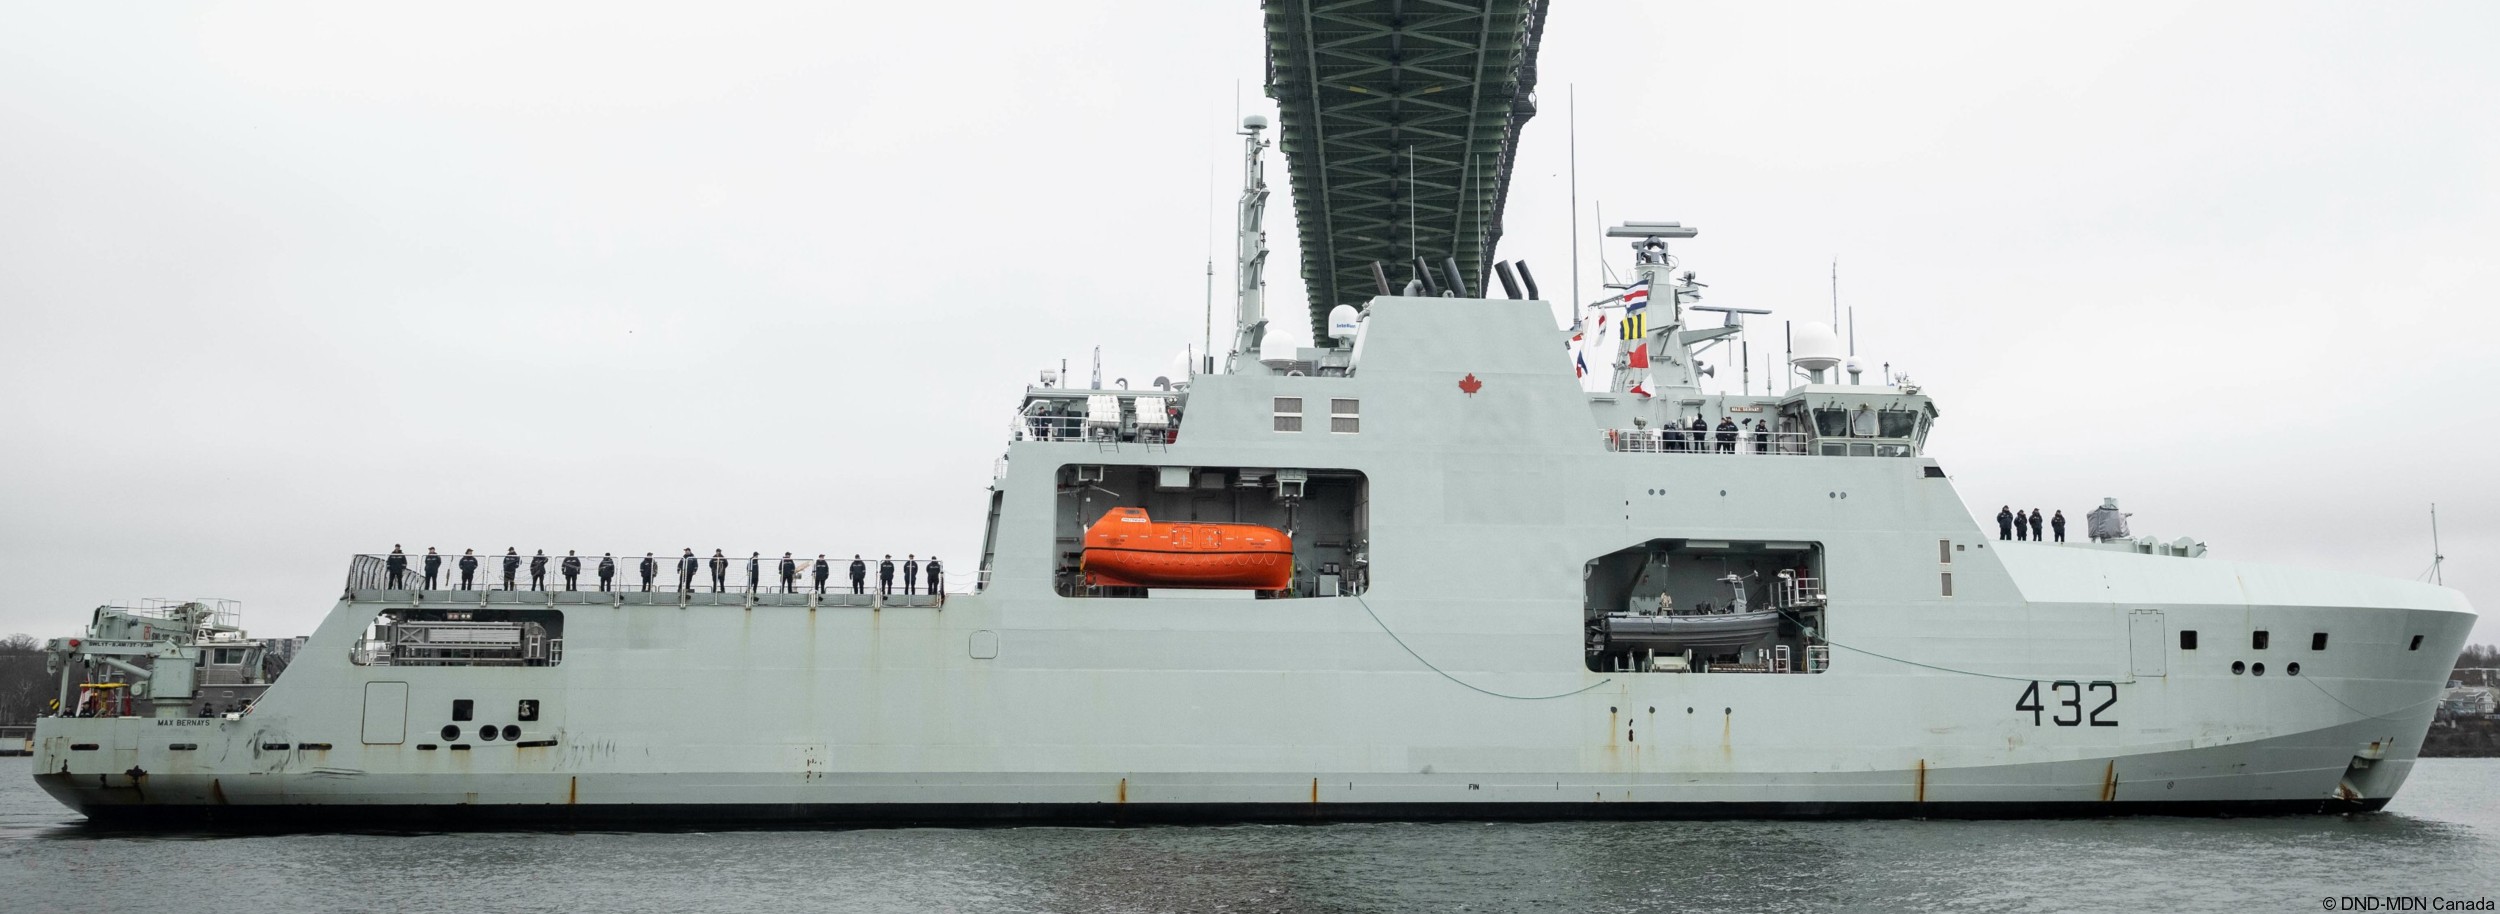 aopv-432 hmcs max bernays harry dewolf class arctic offshore patrol vessel ncsm royal canadian navy 19